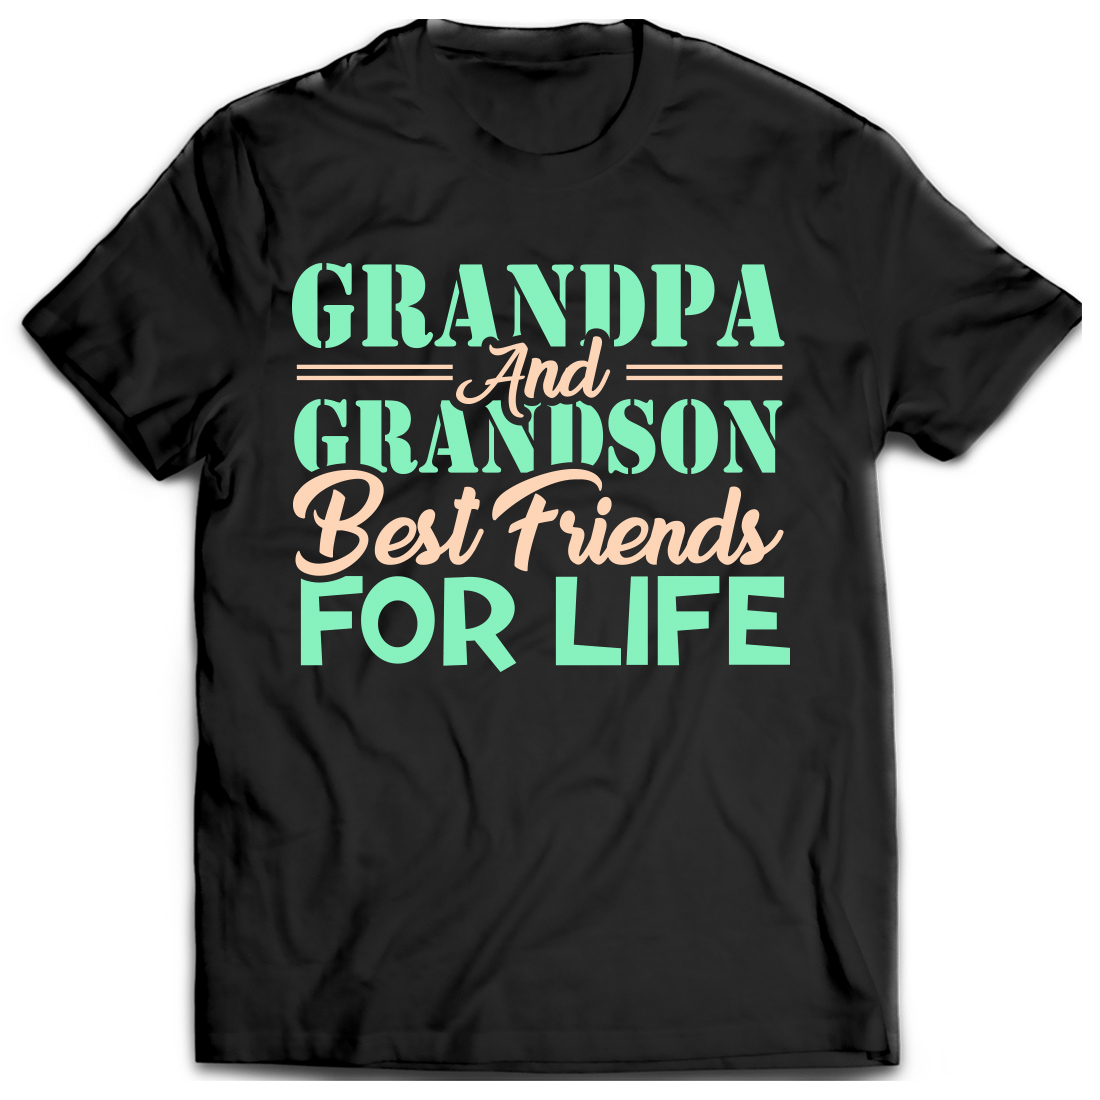 Grandpa T-Shirt Design cover image.